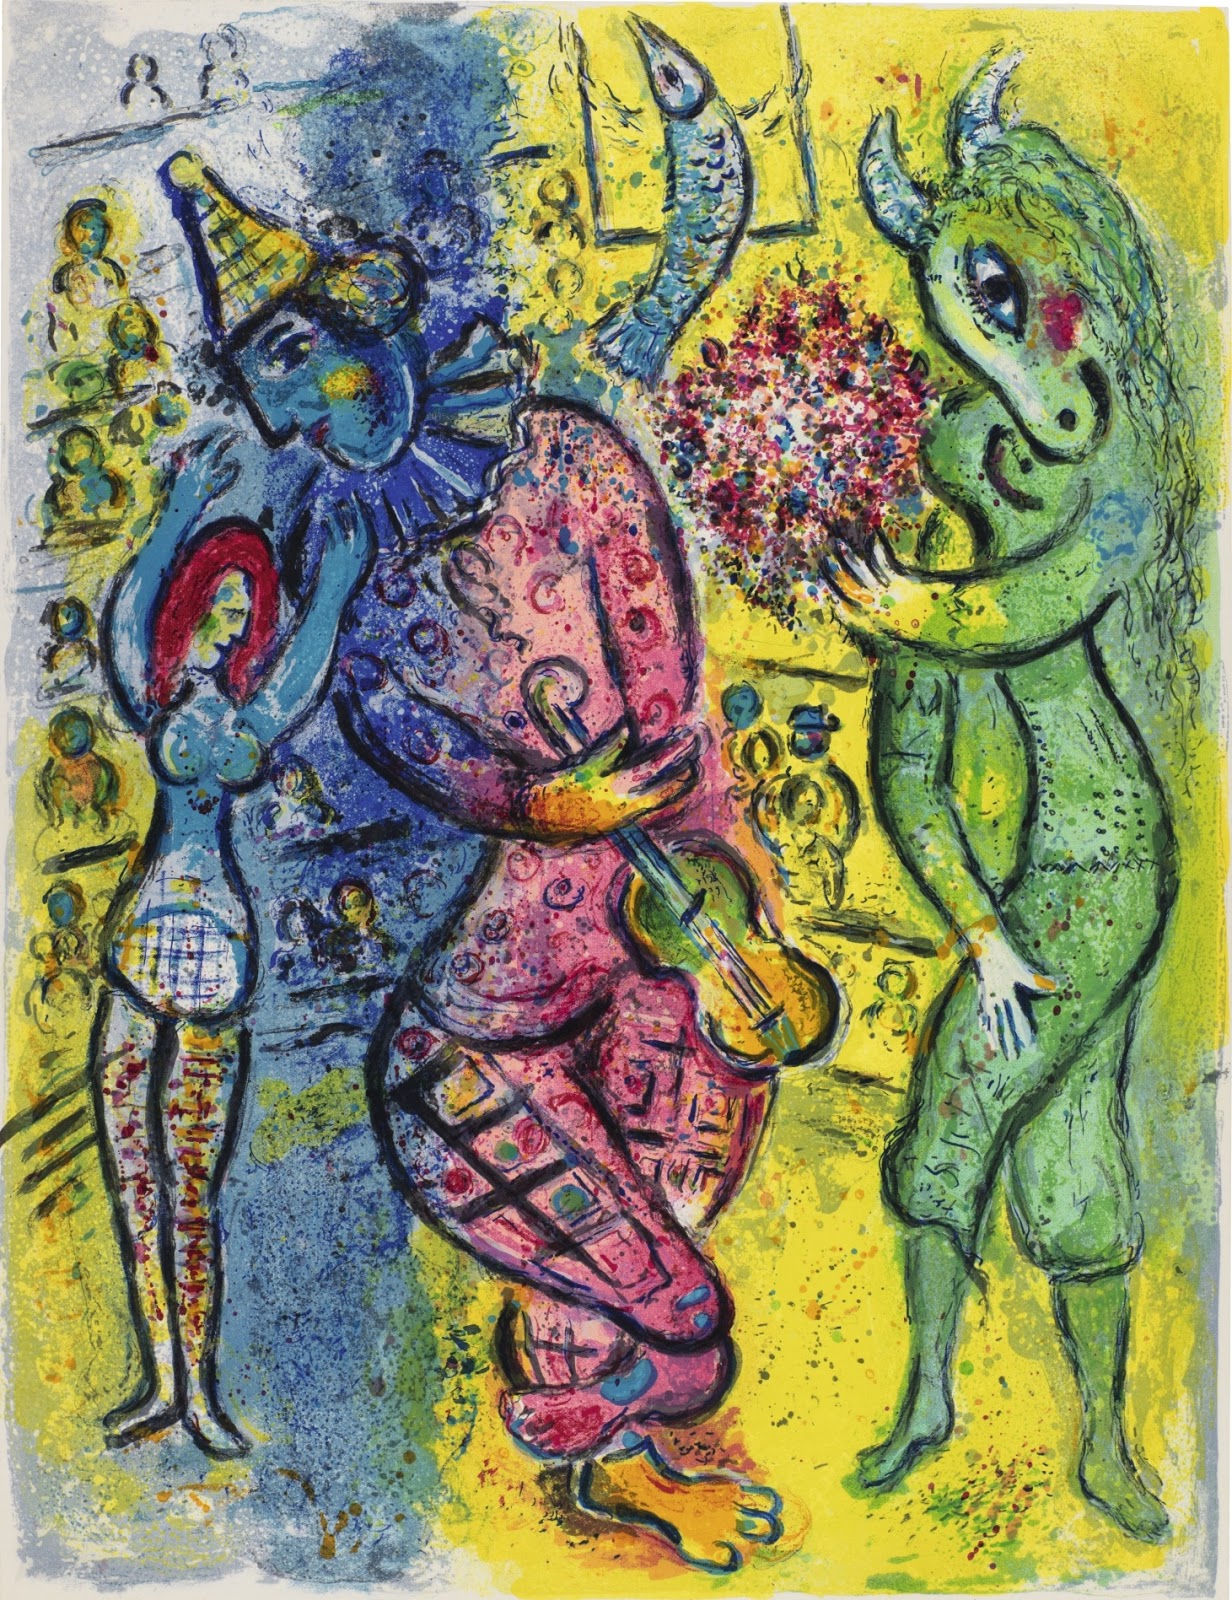 Marc+Chagall-1887-1985 (44).jpg